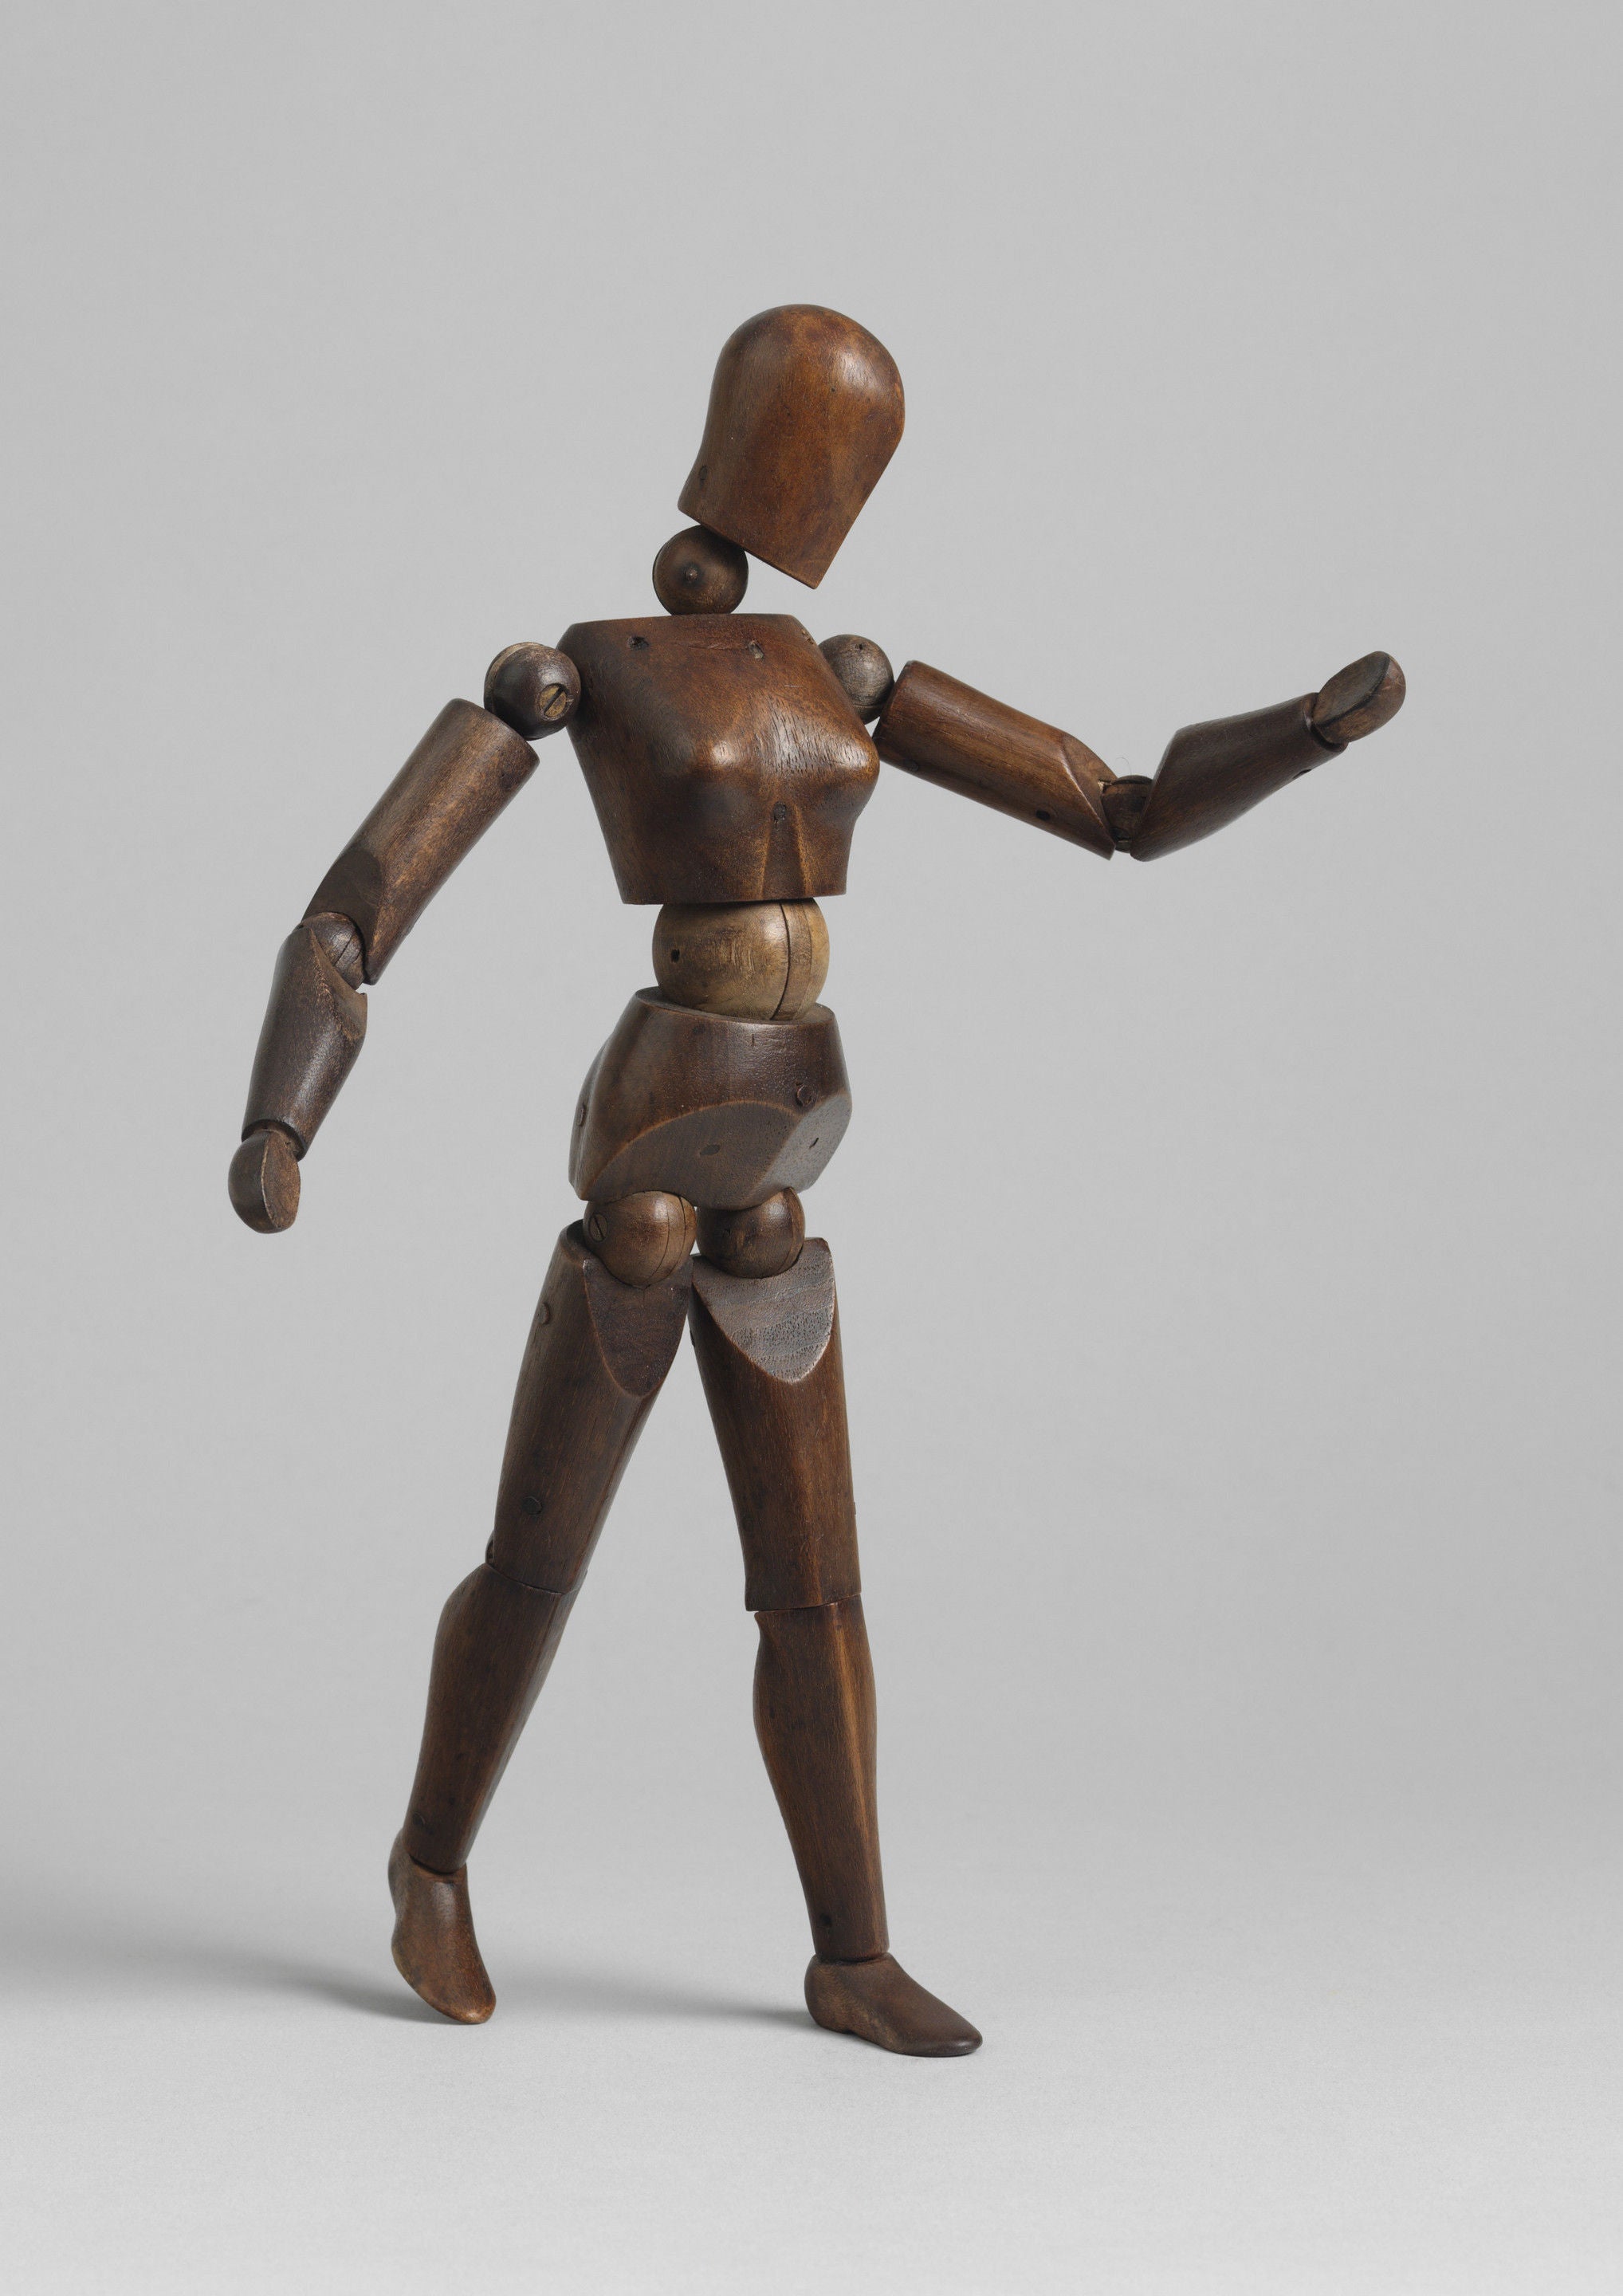 Rare Small Female Form Artist's Lay Figure